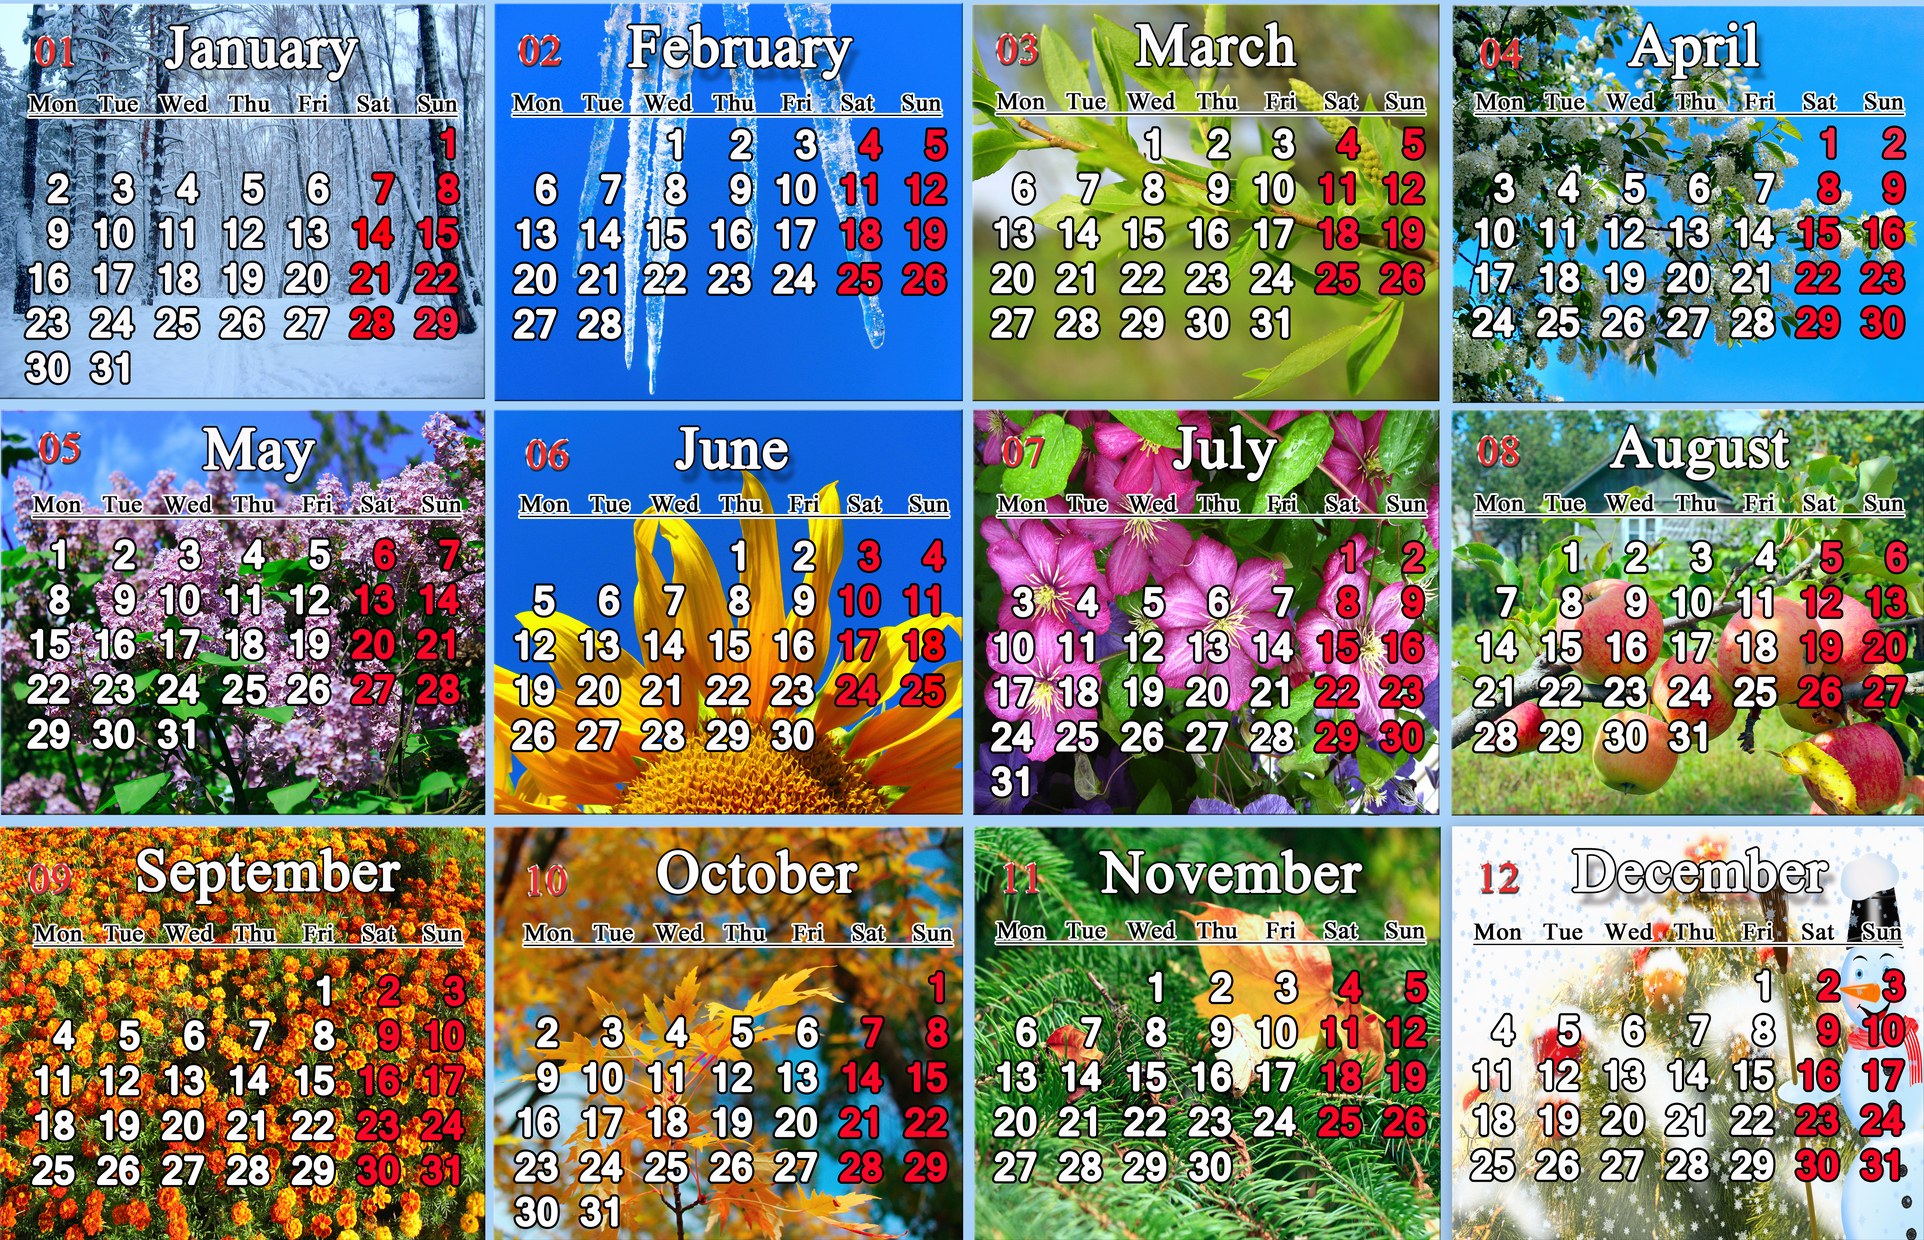 Kalender mit Fotos